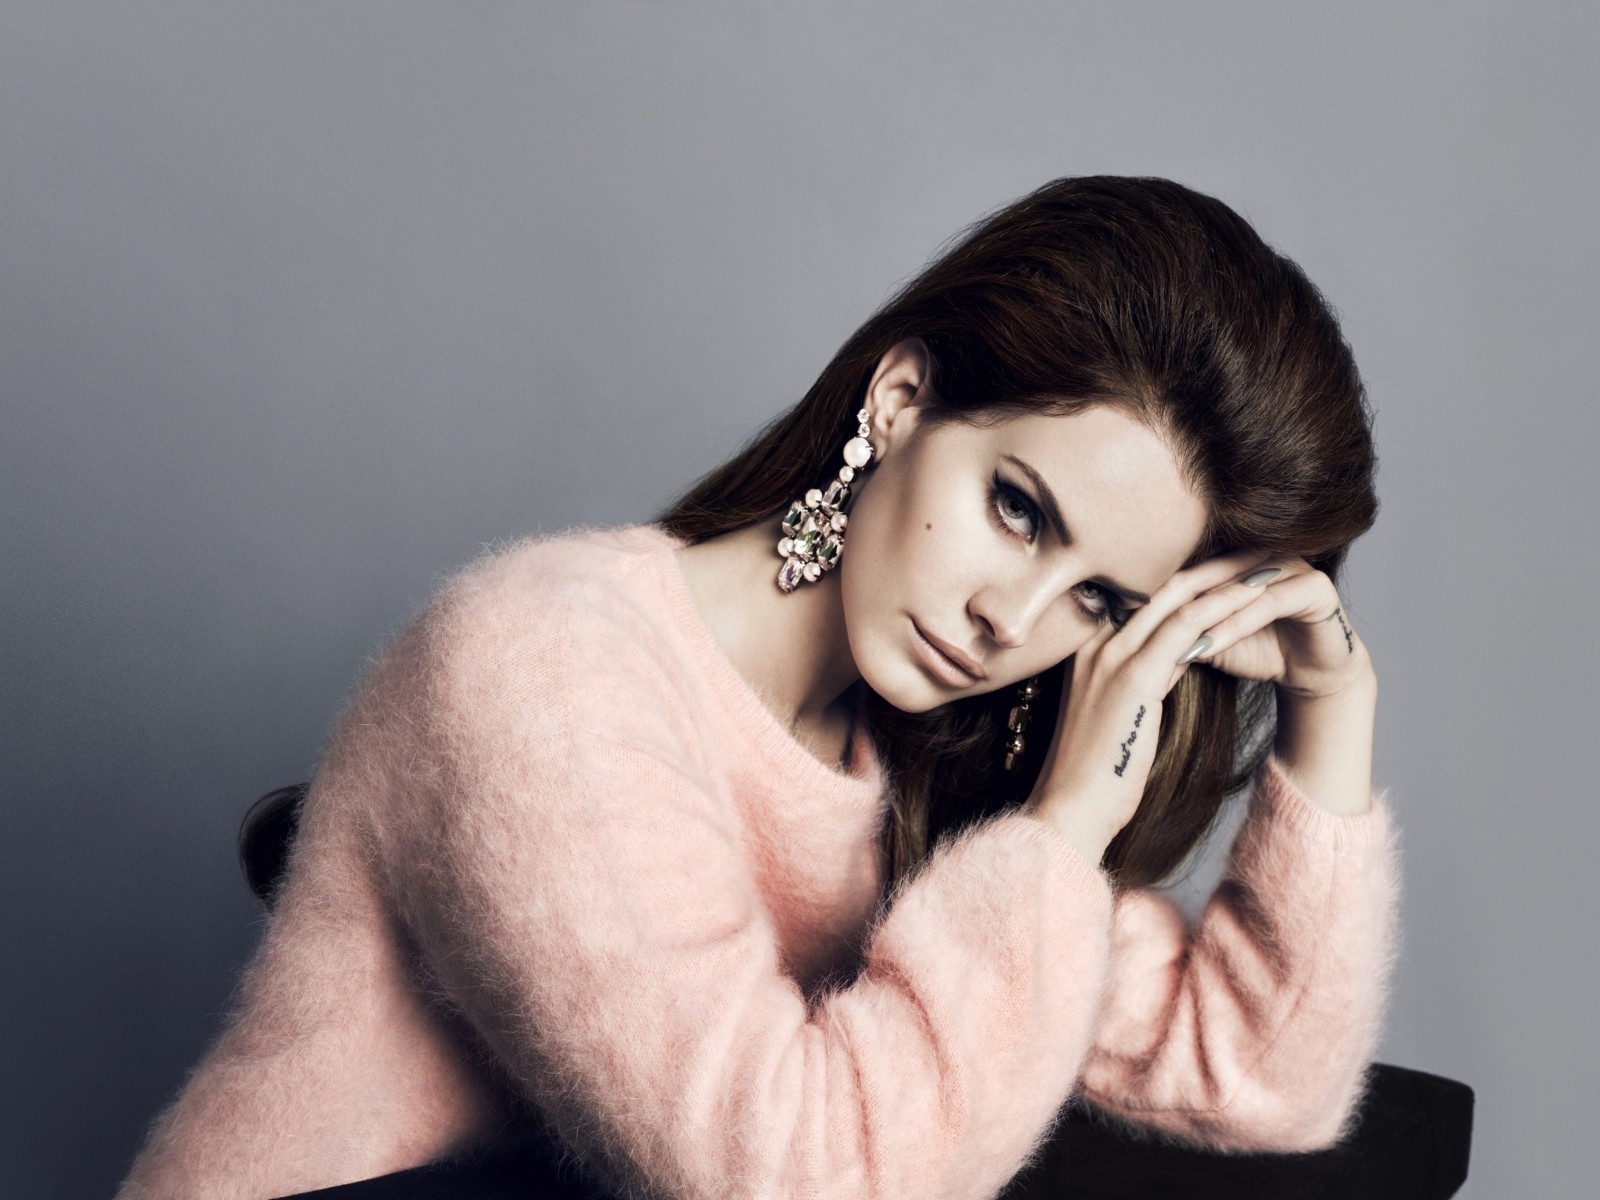 Beautiful Lana Del Rey for 1600 x 1200 resolution